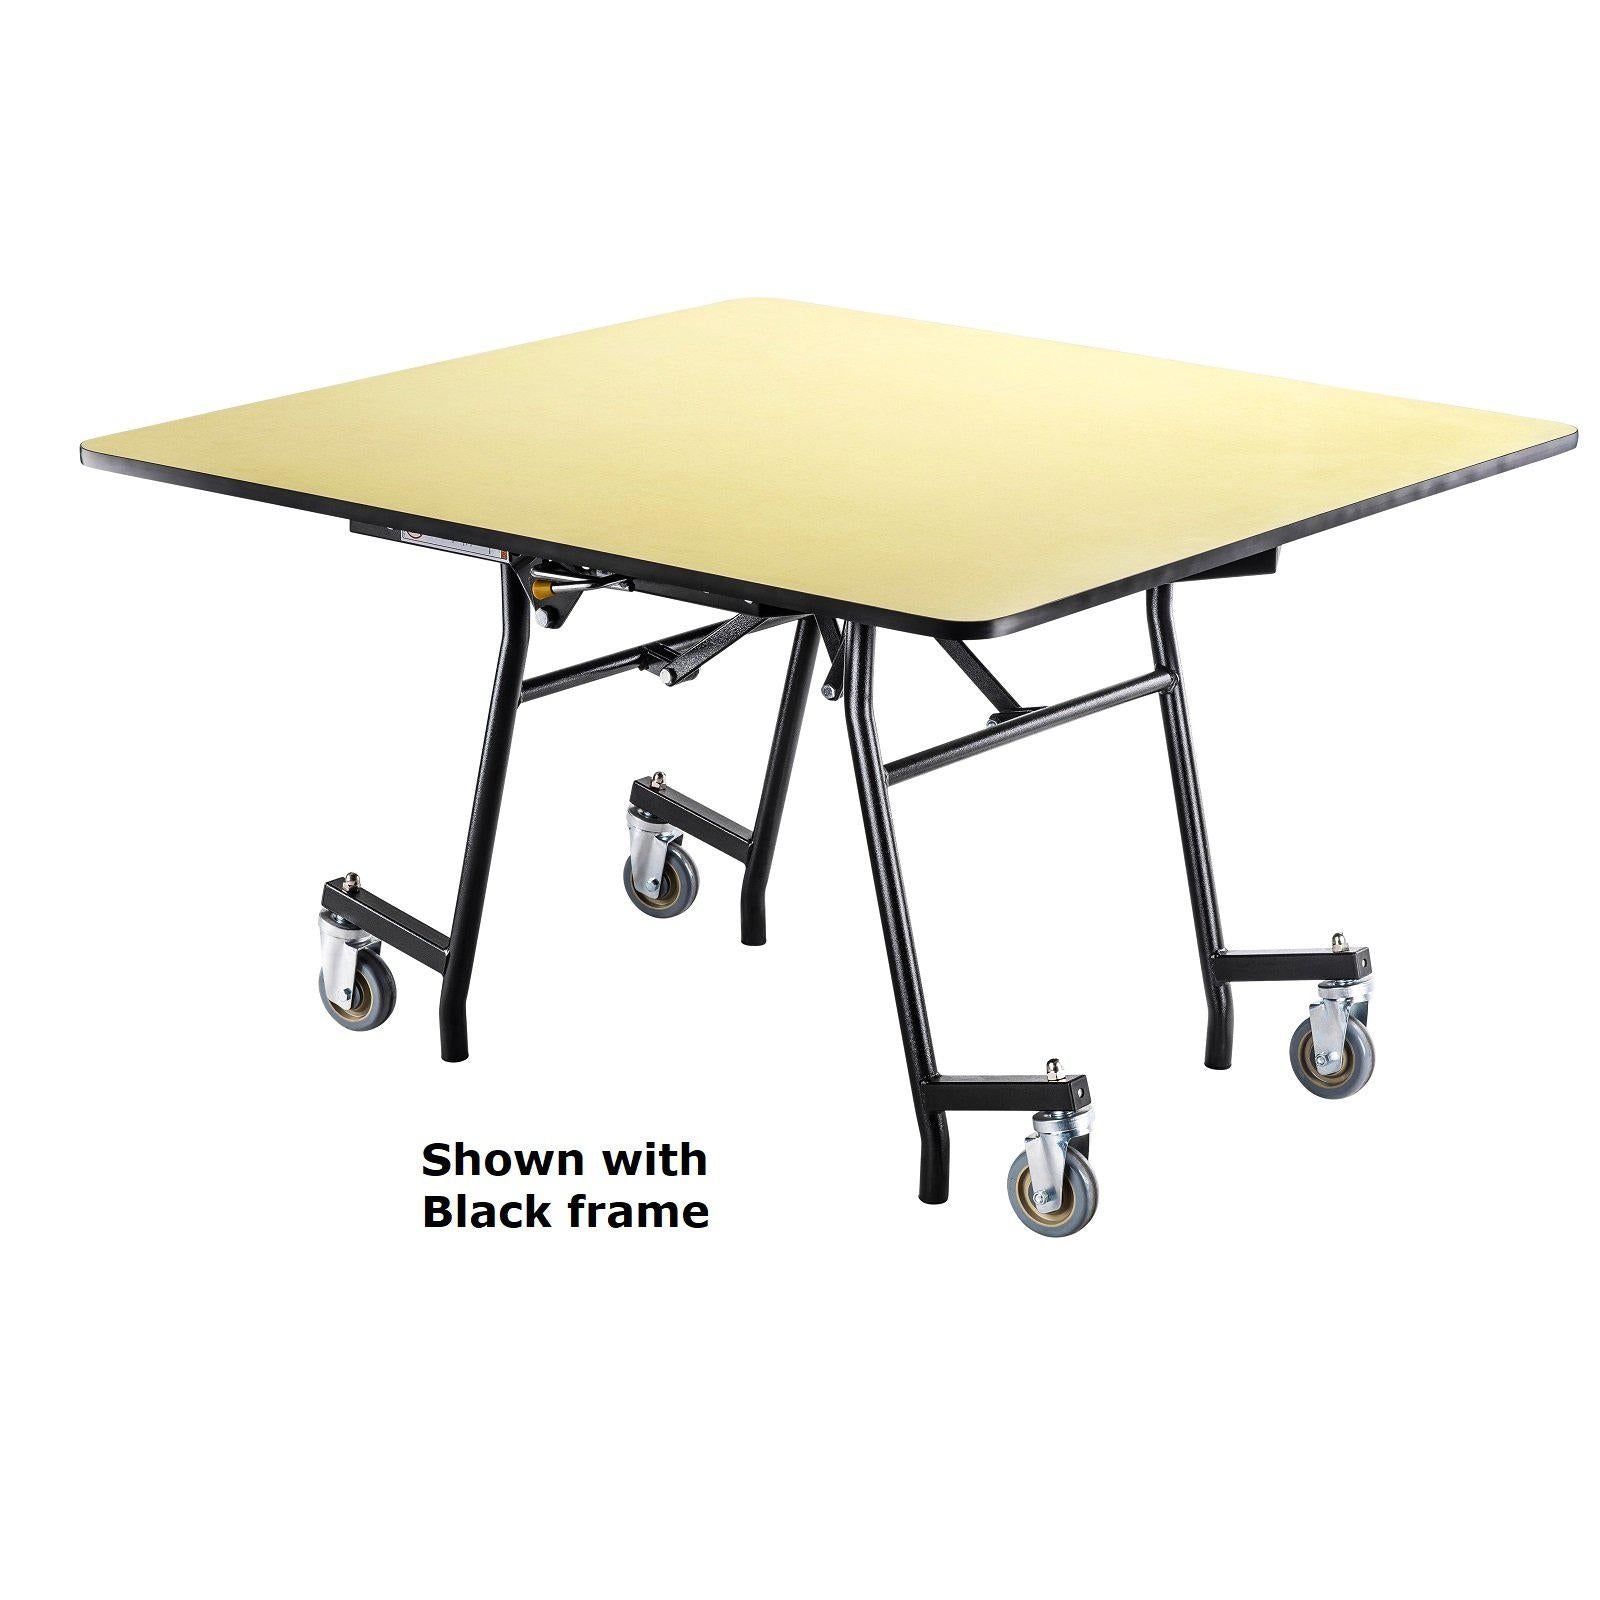 Mobile EasyFold Table, 48" Square, Plywood Core, Vinyl T-Mold Edge, Chrome Frame